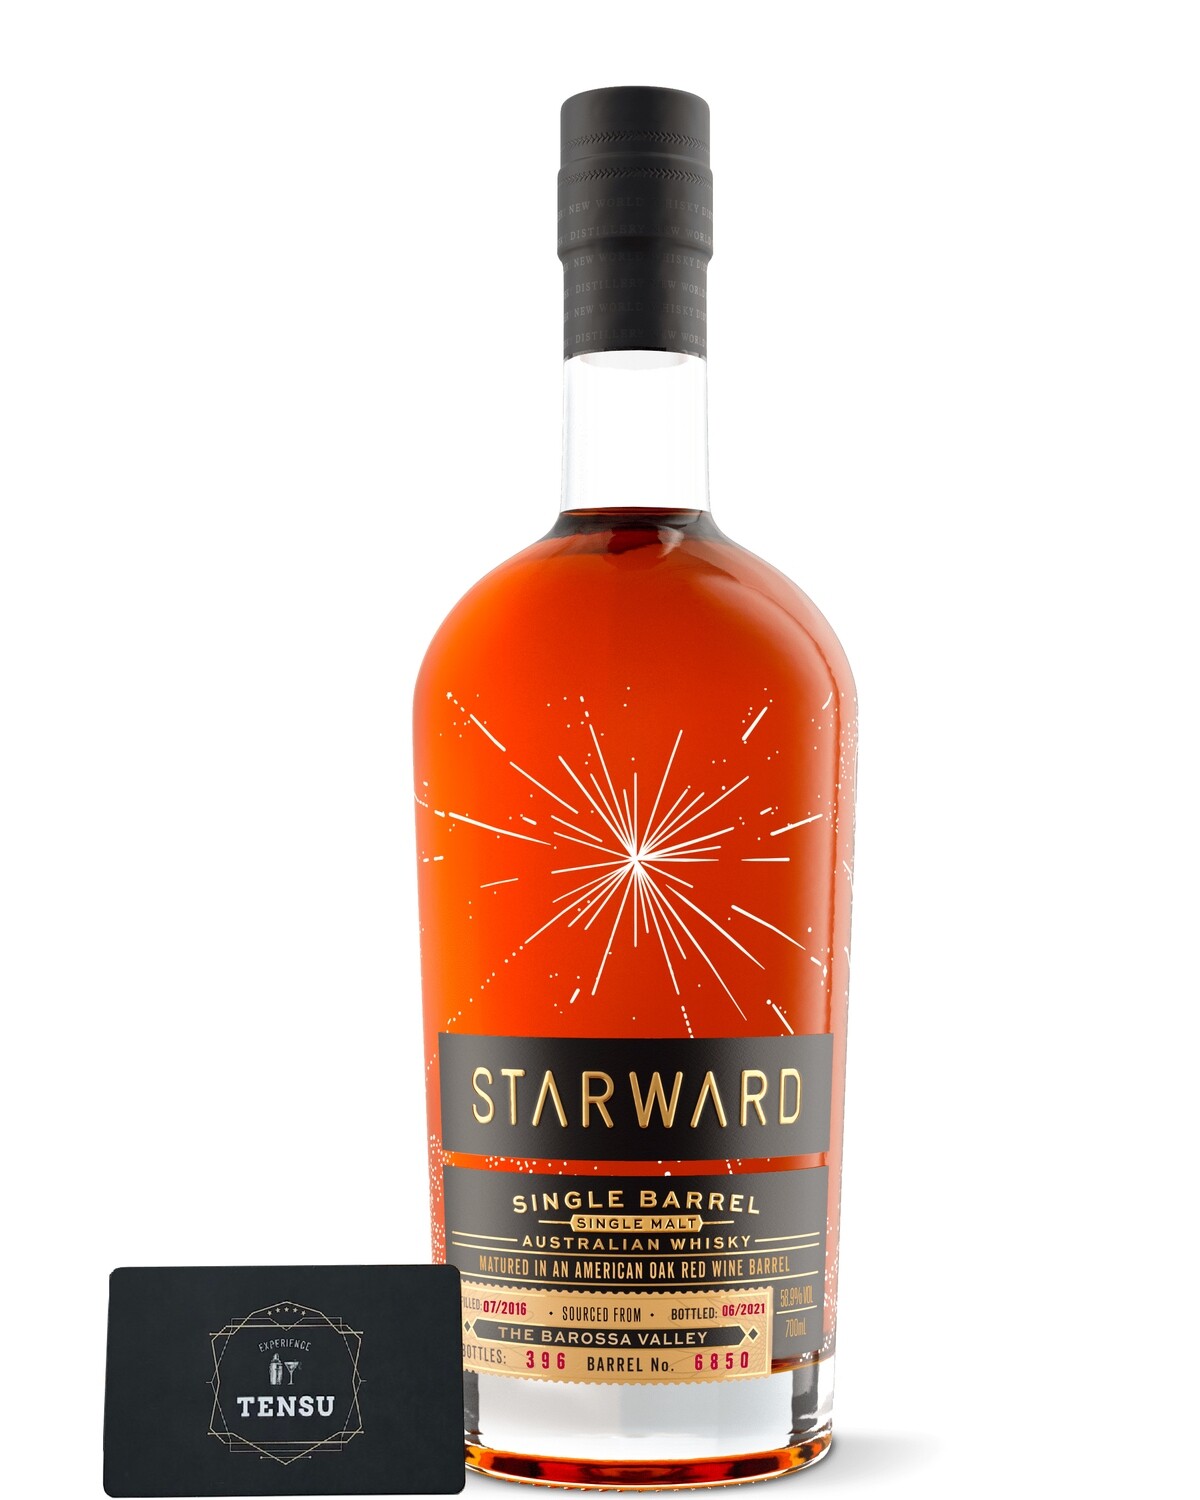 Starward Single Barrel - Single Malt Australian Whisky (2016-2021) 58.9 "For The Nectar"